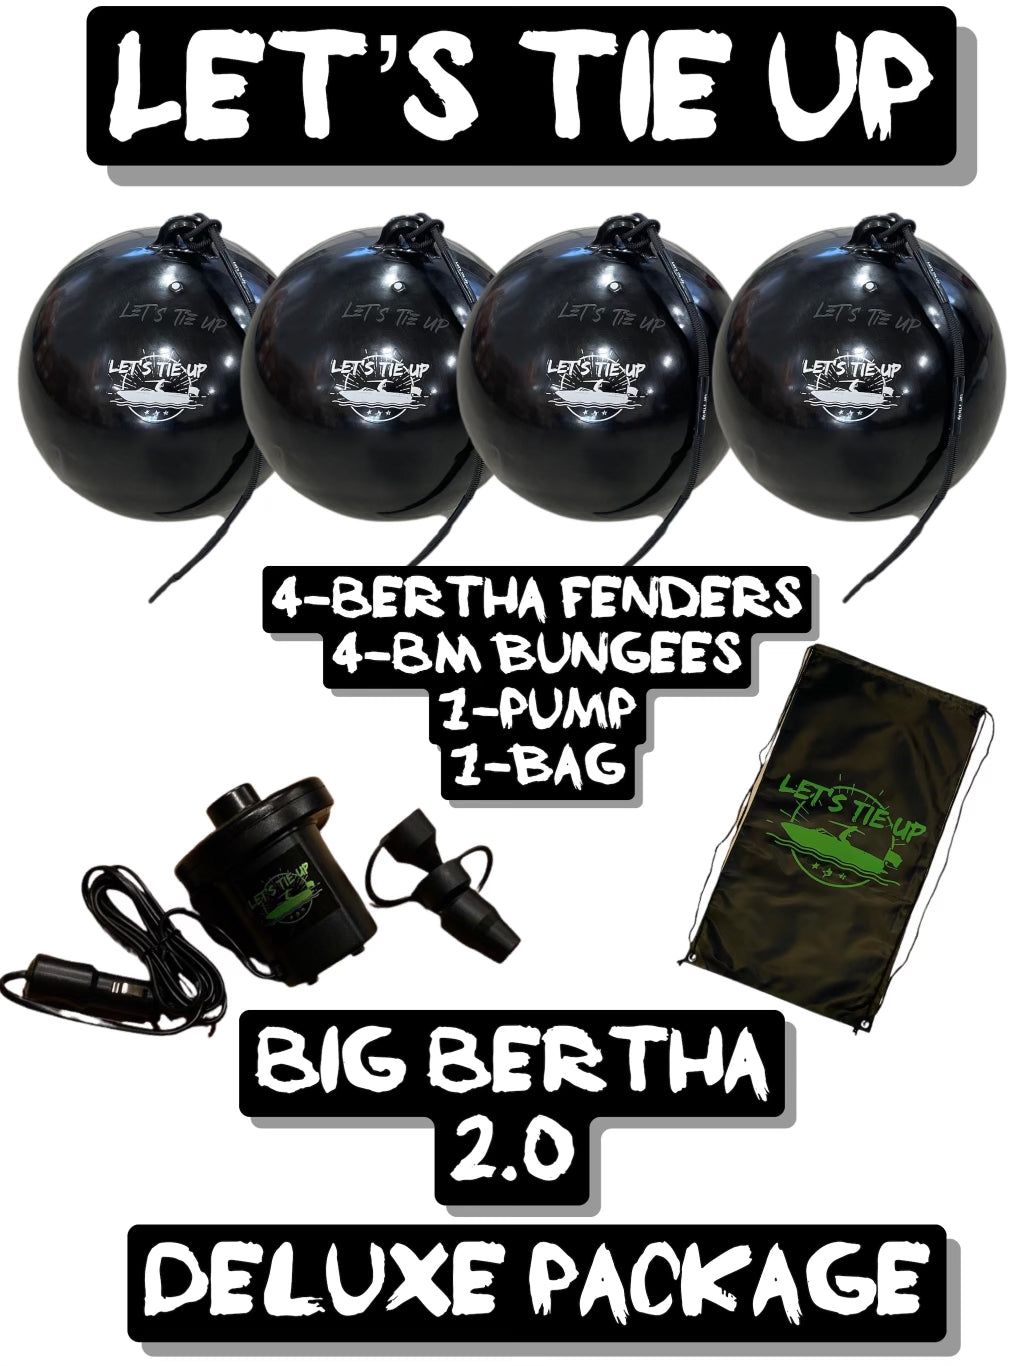 Big Bertha 2.0 Deluxe Package – Let's Tie Up